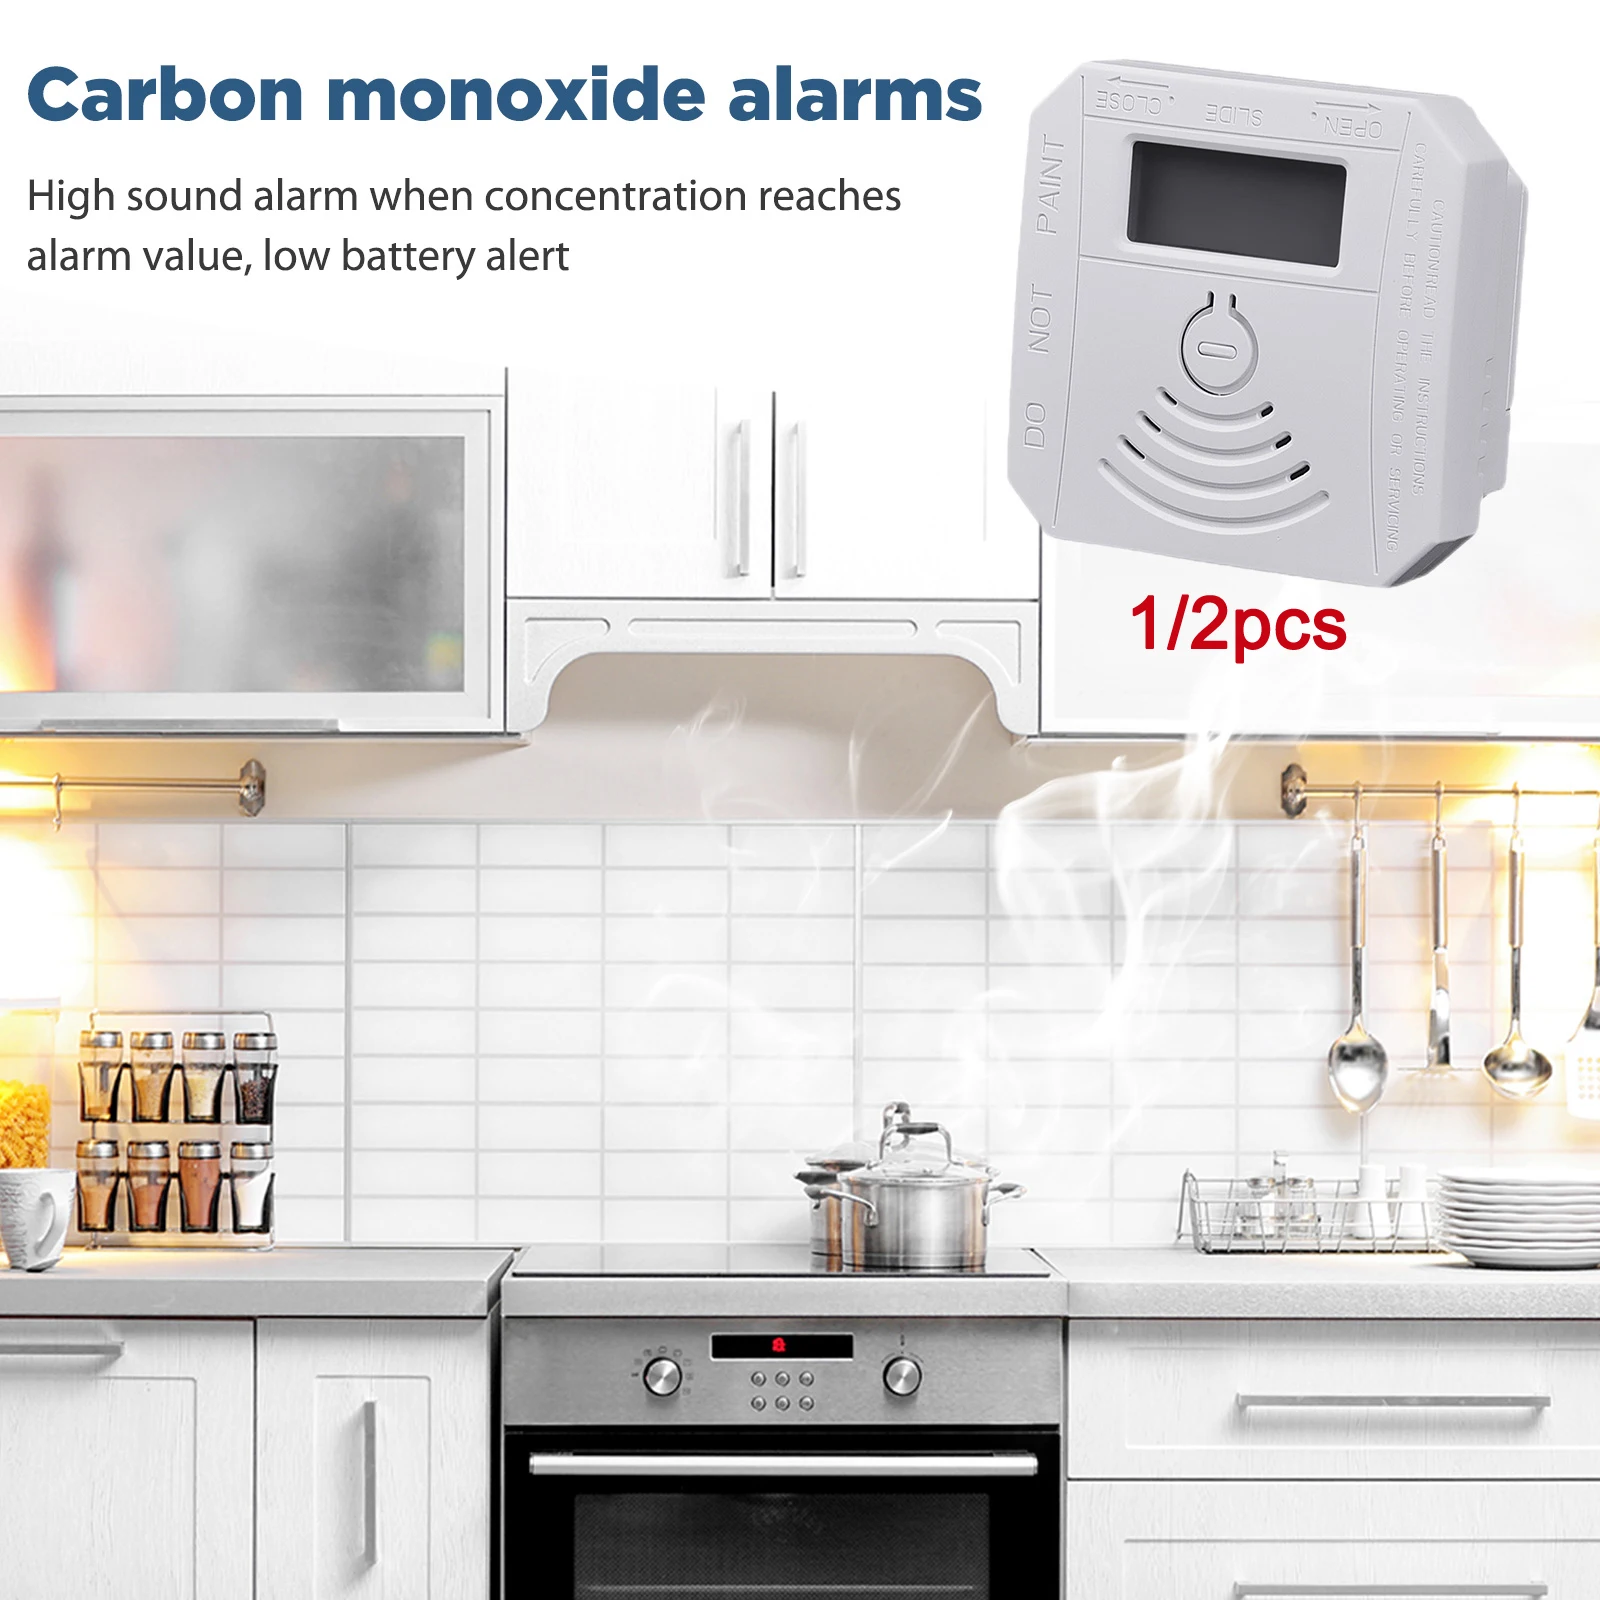 

LED LCD Display CO Alarm Fault Self-check Mini Carbon Monoxide Alarm High Sensitivity CO Monitoring Sensors Home Security System